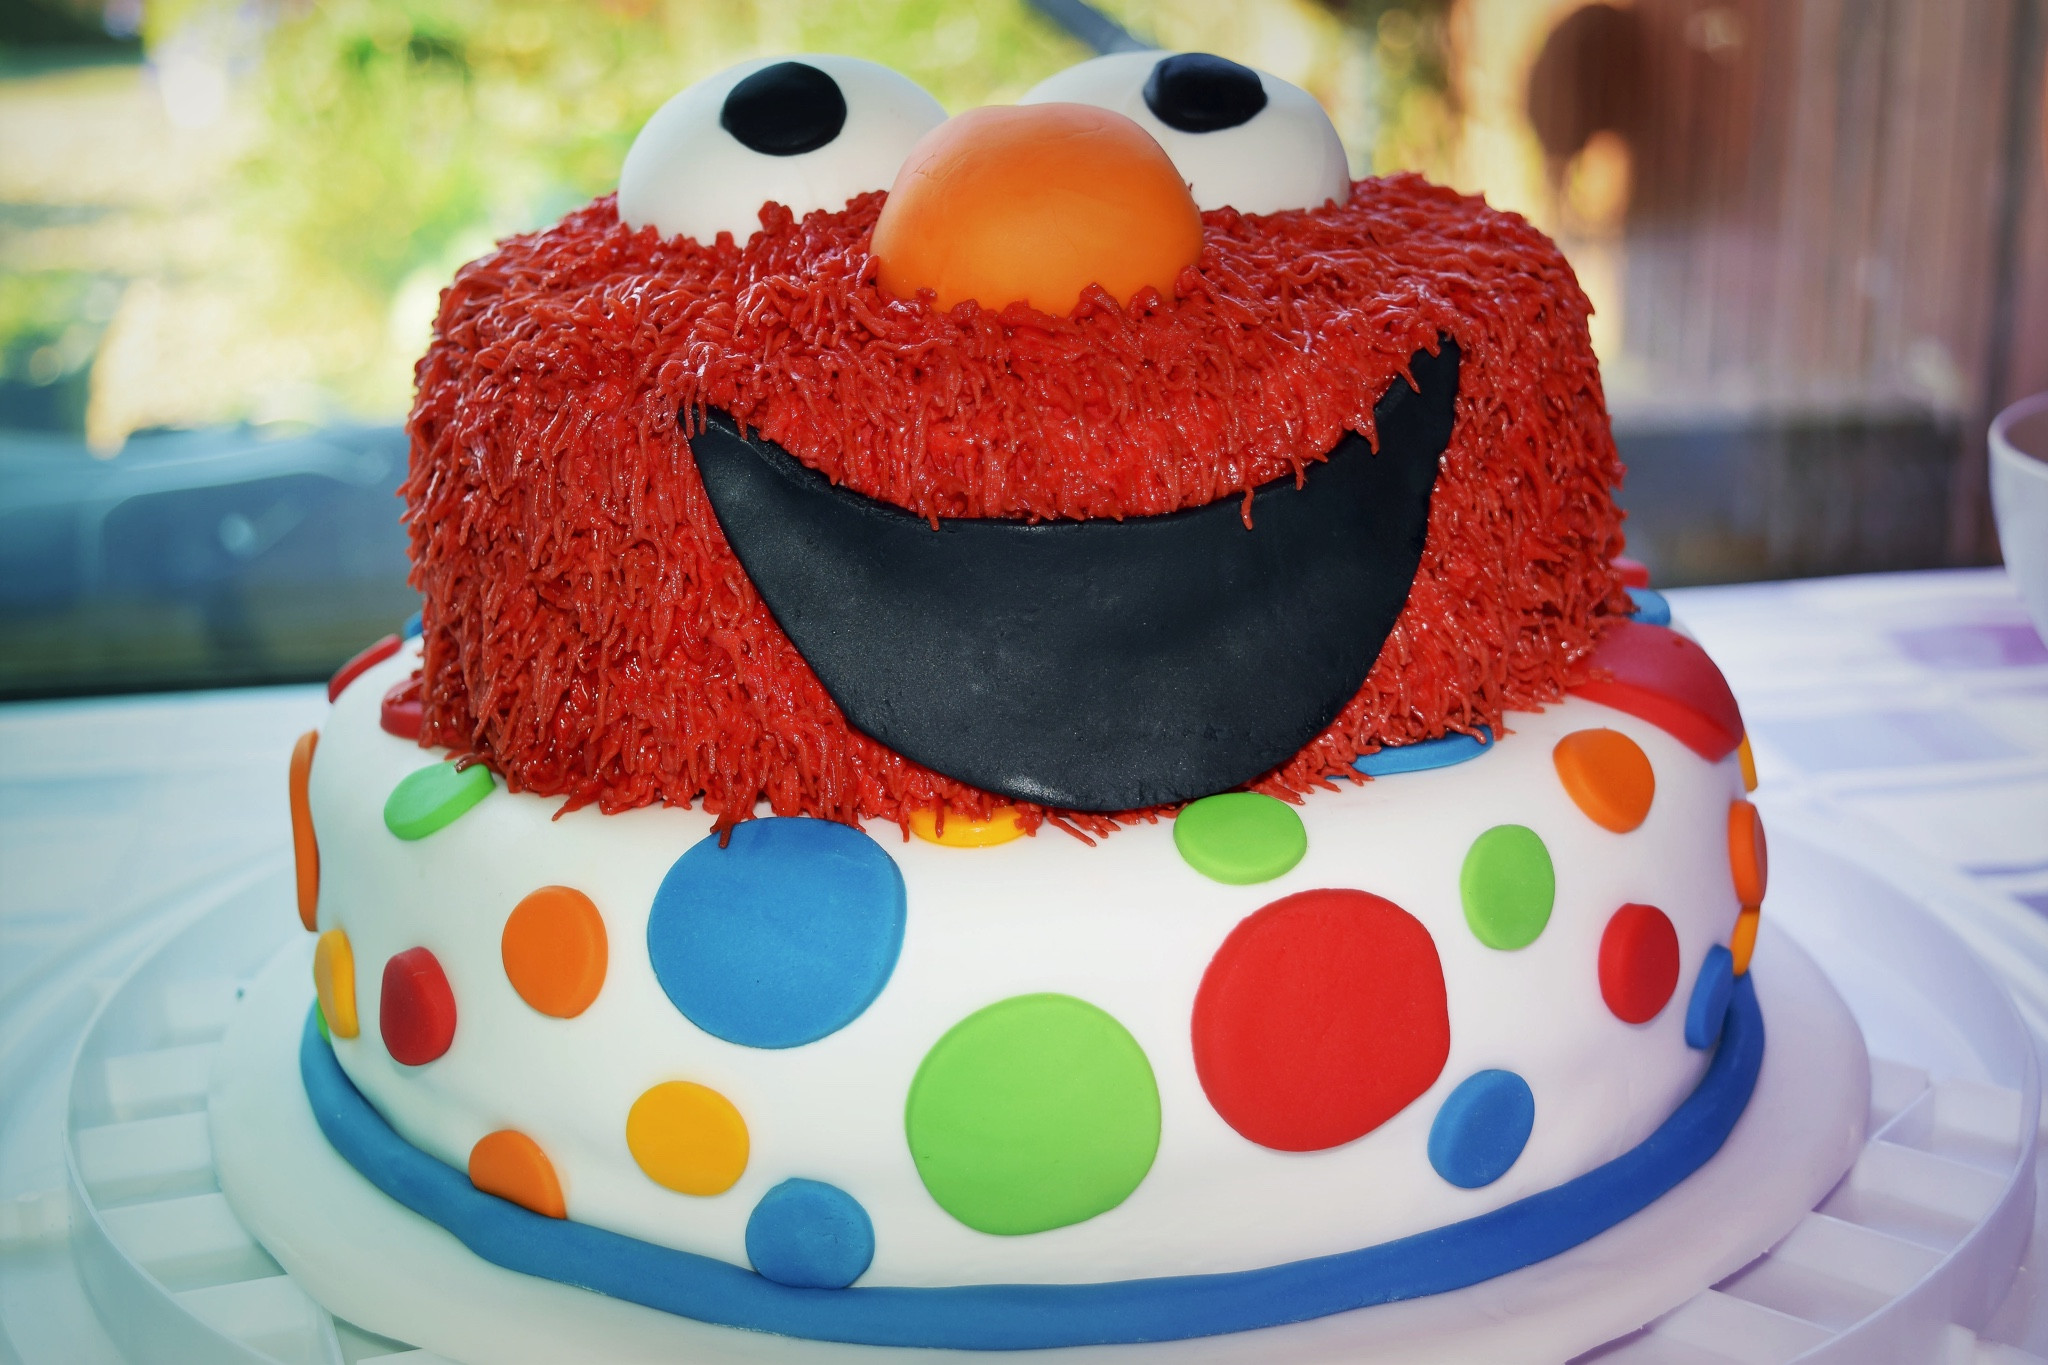 Best ideas about Elmo Birthday Cake
. Save or Pin Making an Elmo birthday cake Glasgow With Kids Now.